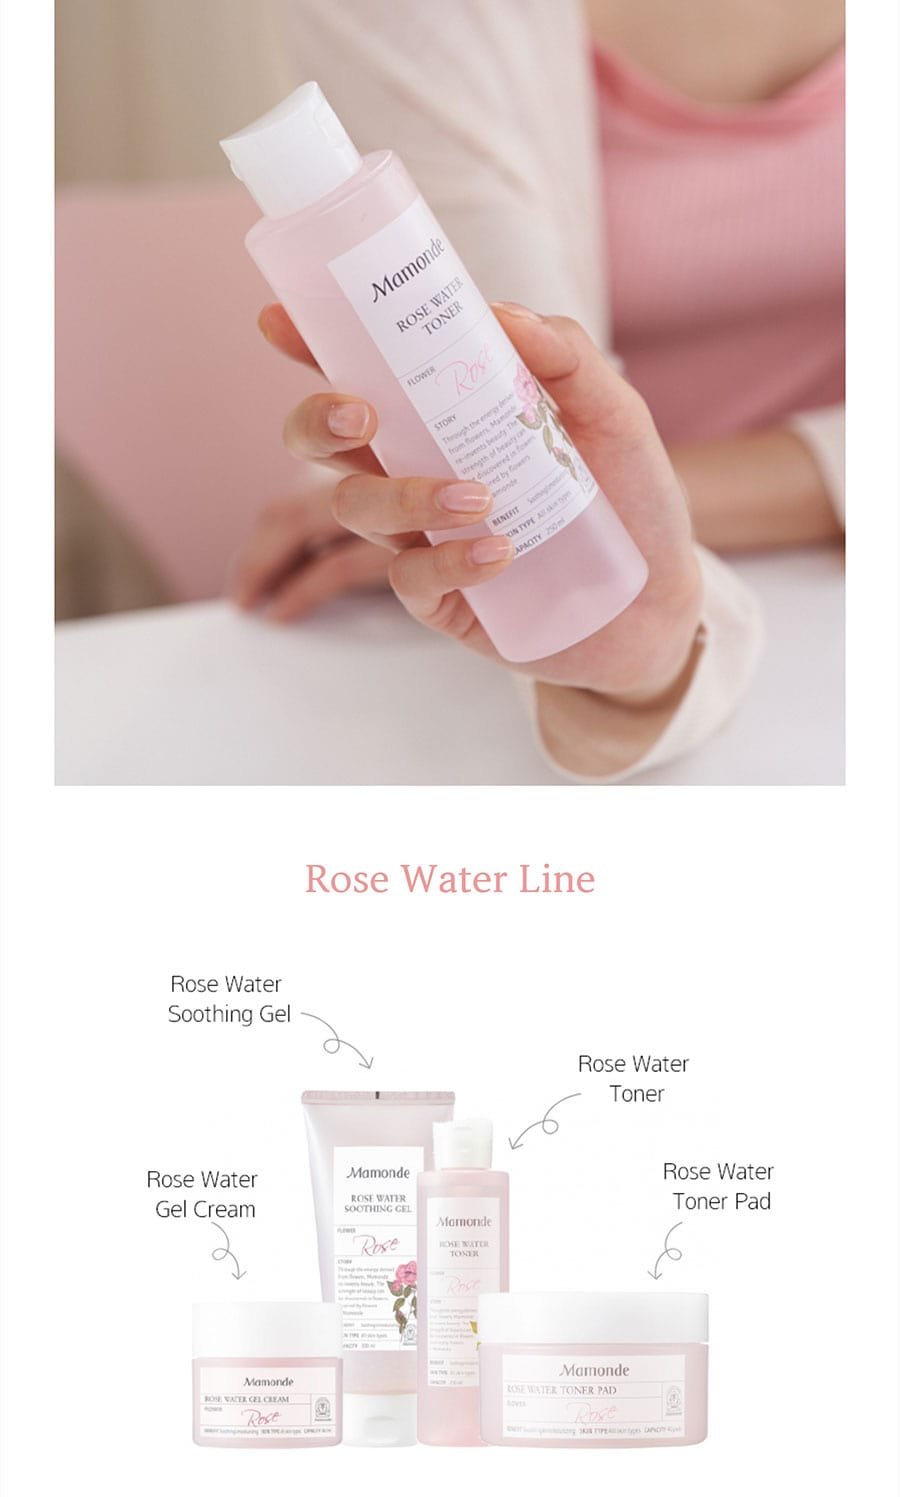 Rose Water Toner - Product